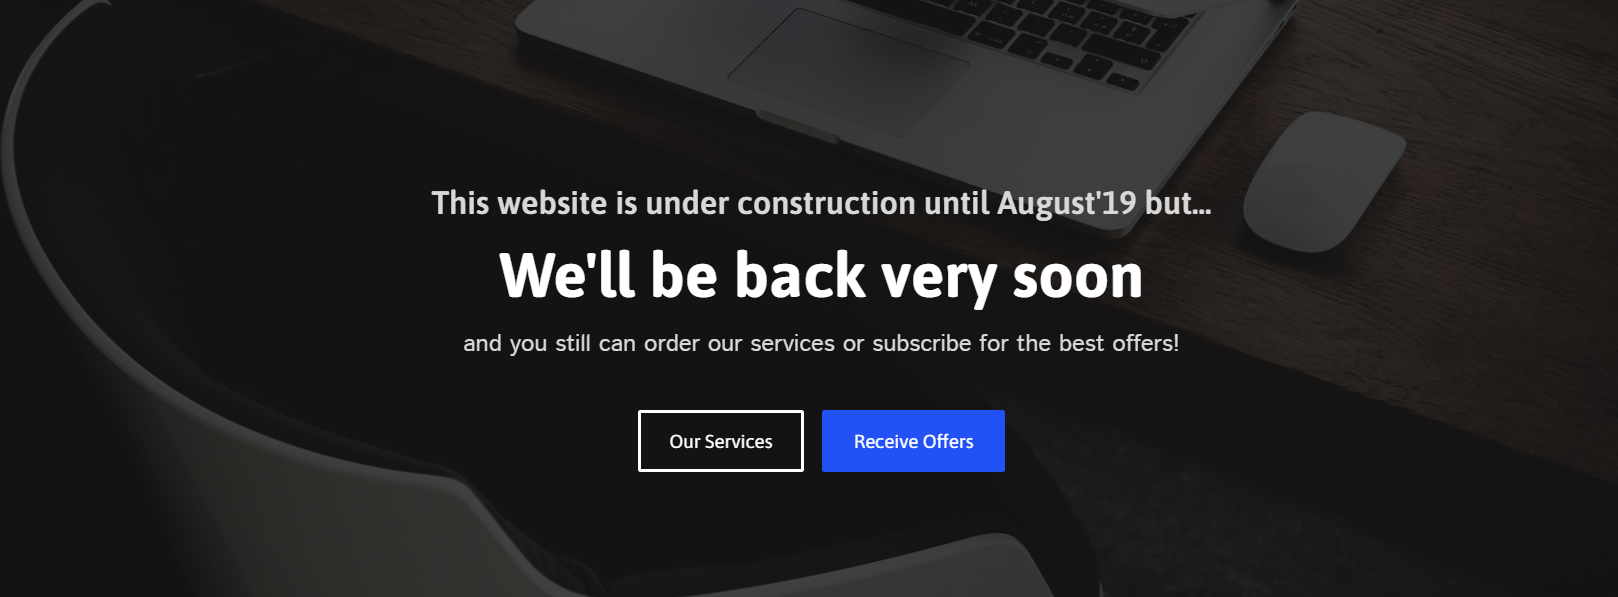 Website under construction message